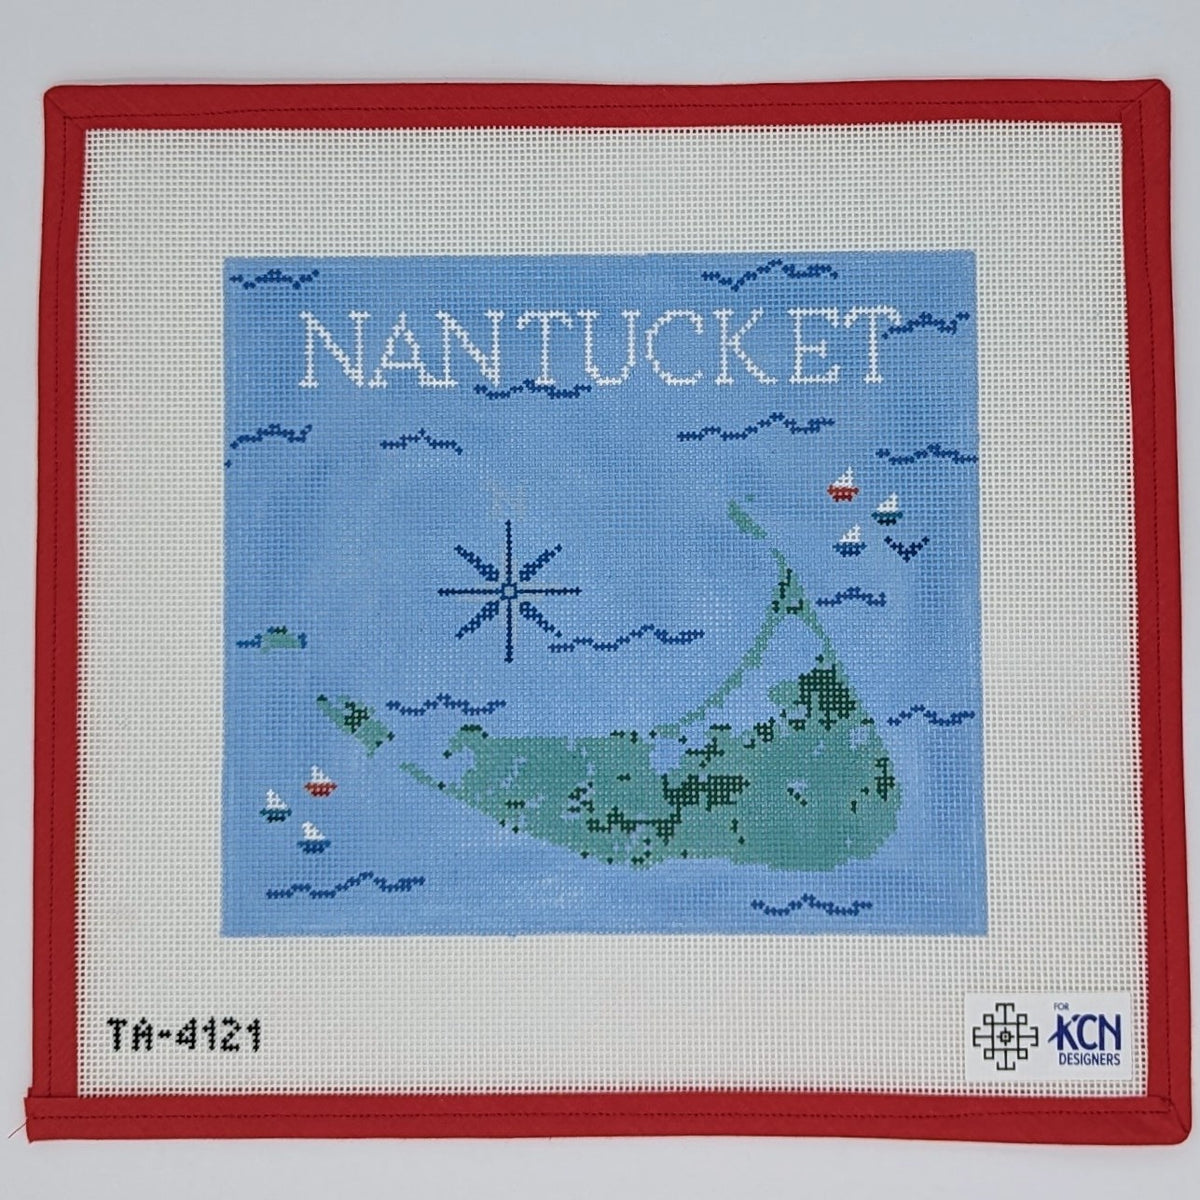 Nantucket Map